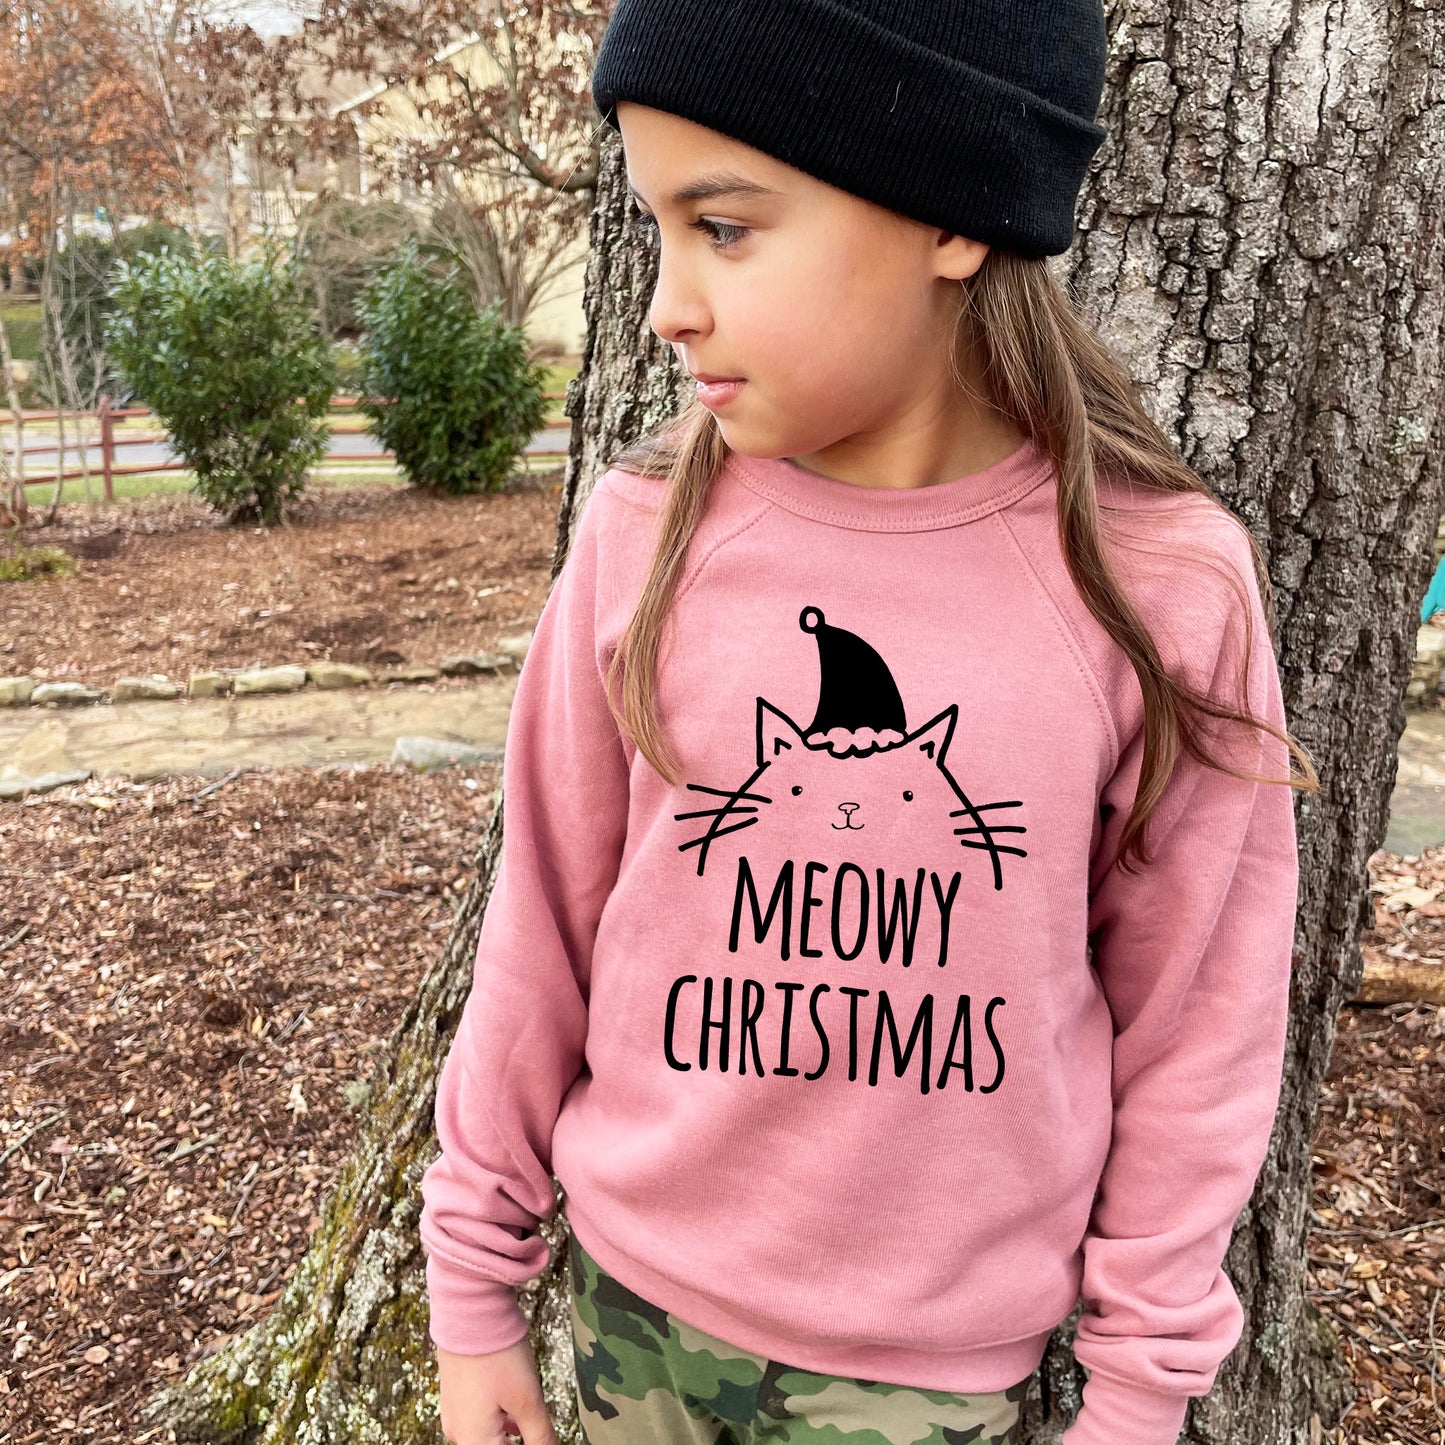 Meowy Christmas (Cat) - Kid's Sweatshirt - Heather Gray or Mauve